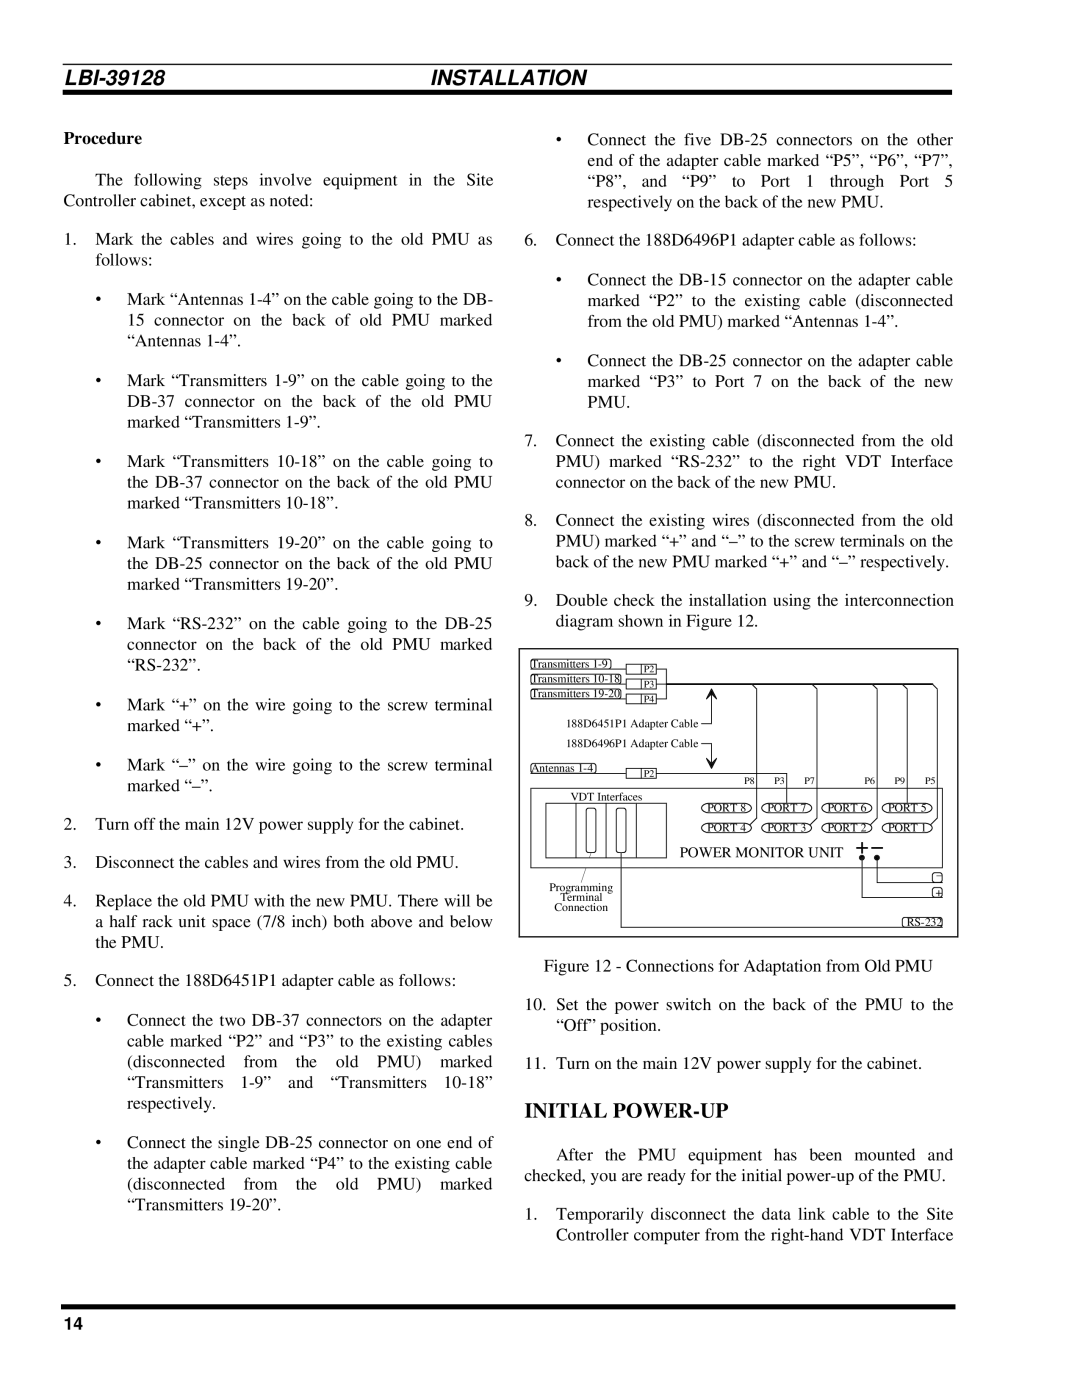 Ericsson LBI-39128 manual Initial POWER-UP 